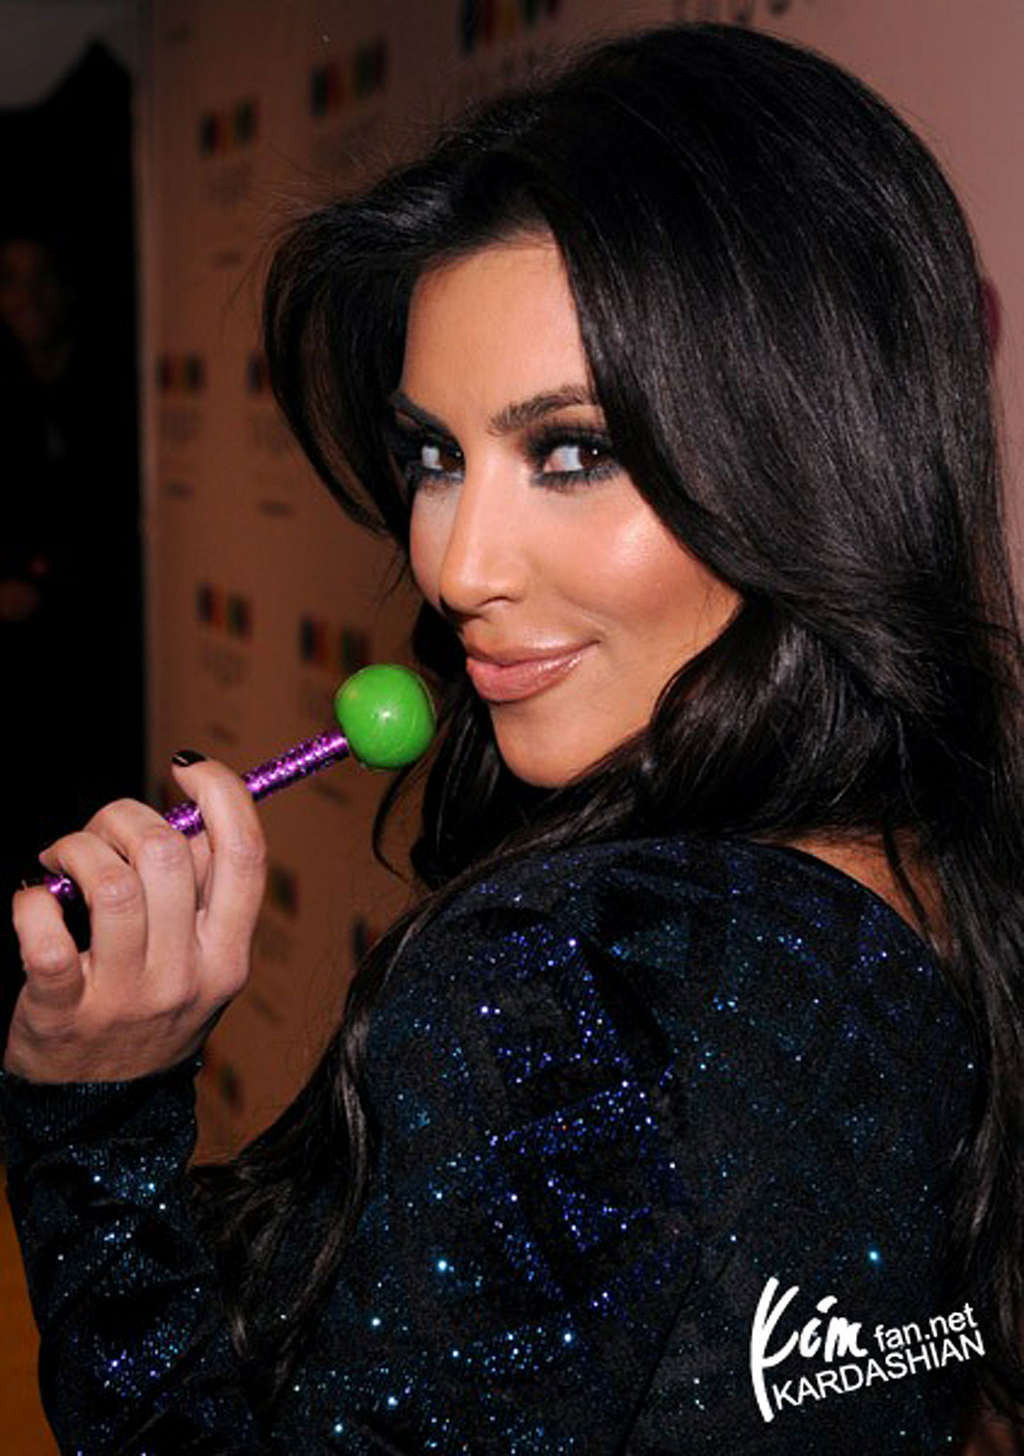 Kim Kardashian licking lollipop on a extremely sexy way hot photos #75363015